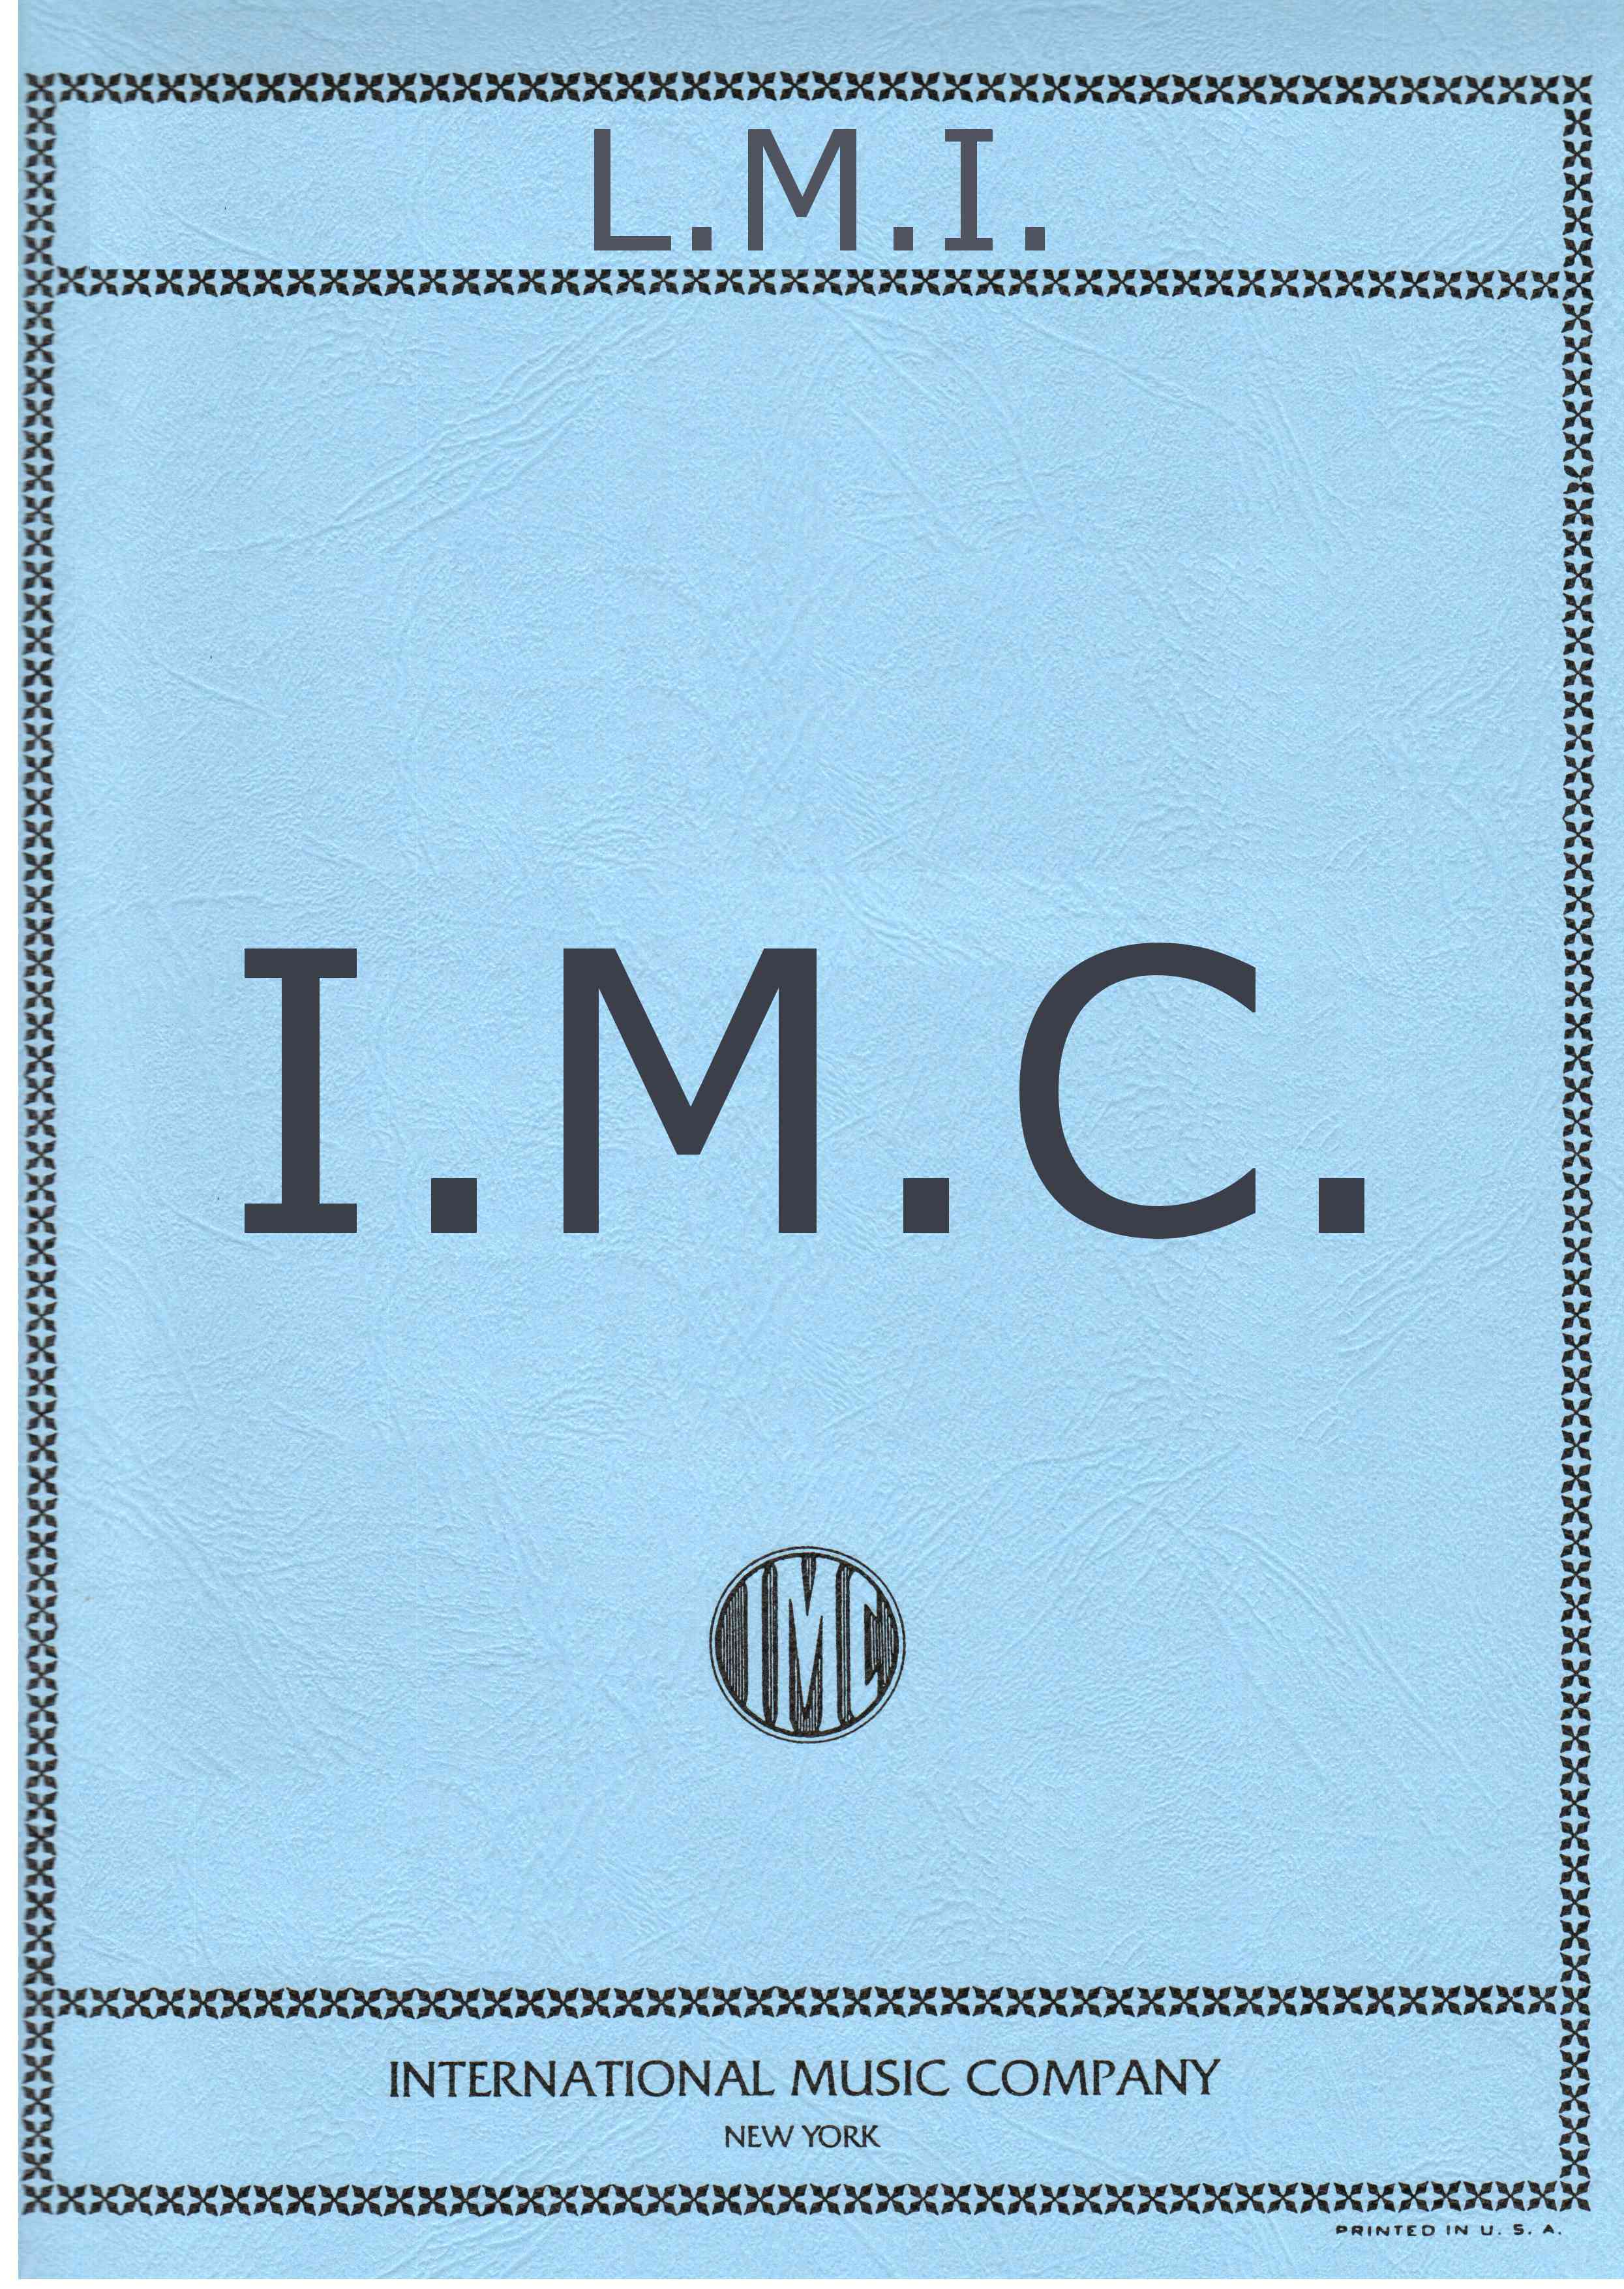 IMC (International Music Company)